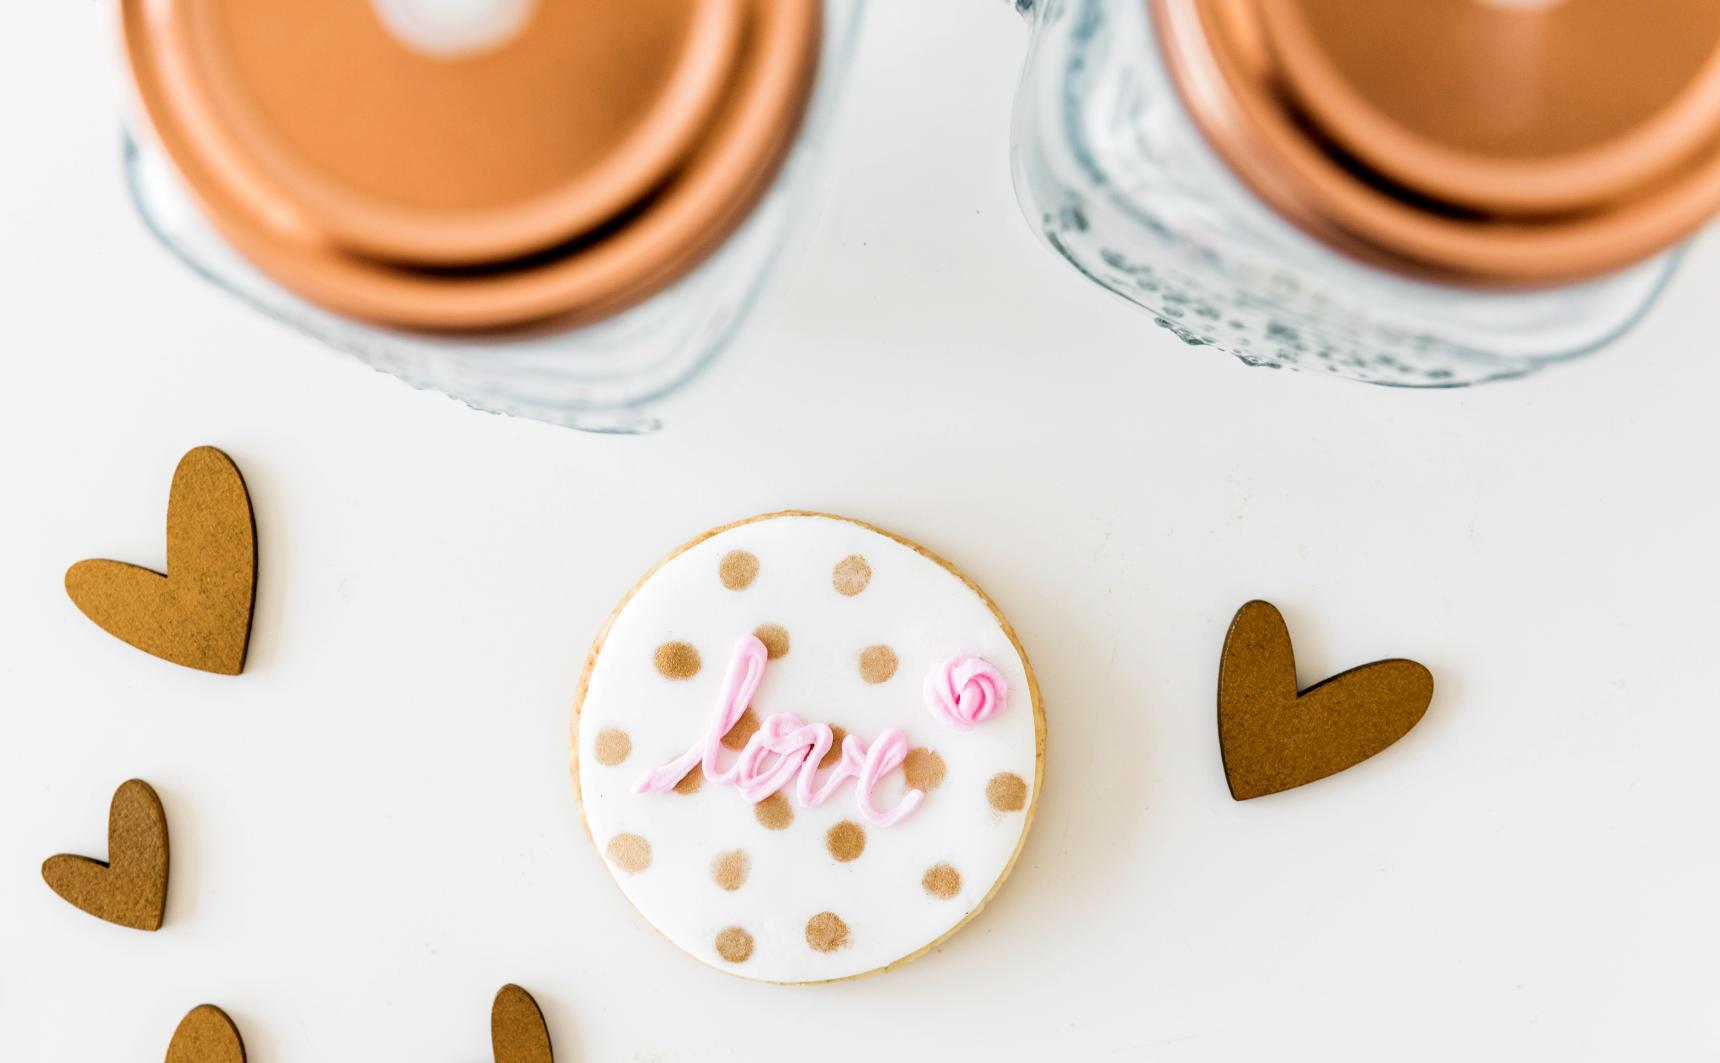 Cookies in mason jars as a DIY wedding favour idea